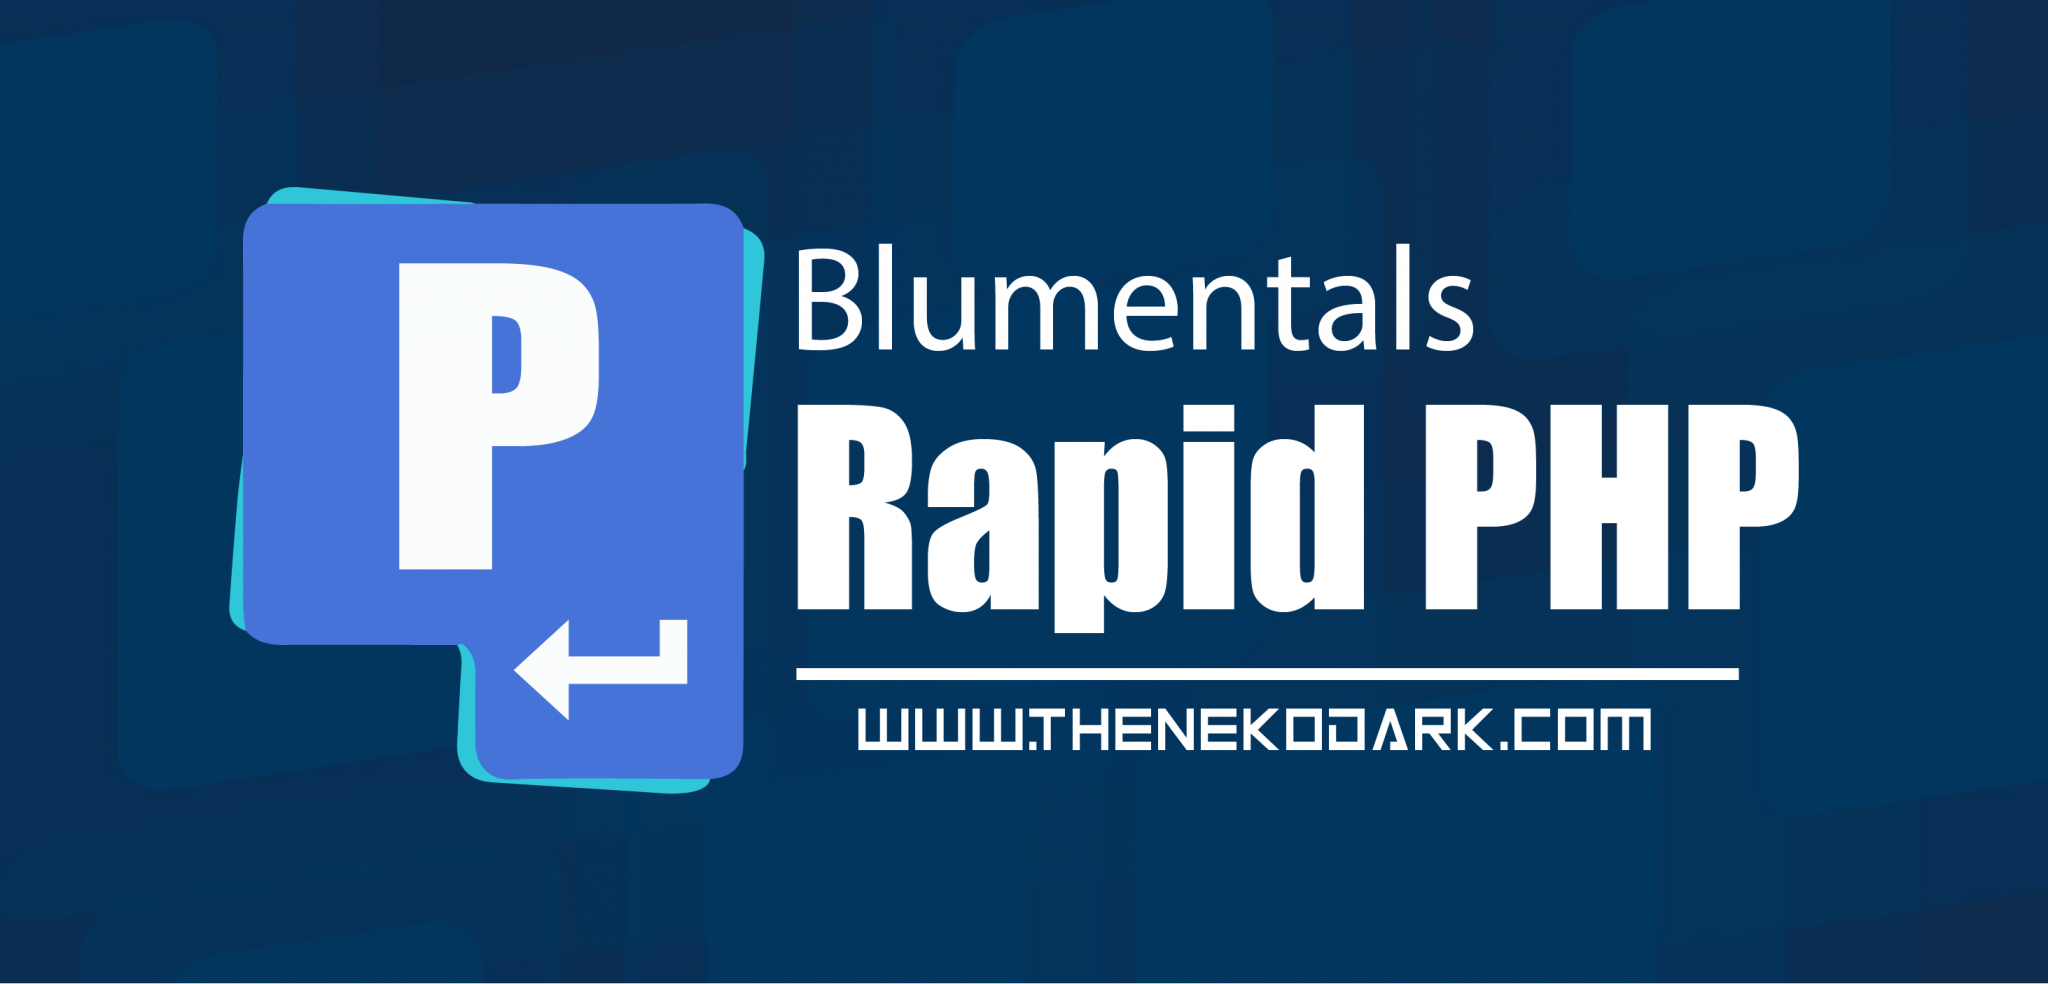 alternatives to blumentals rapid php editor